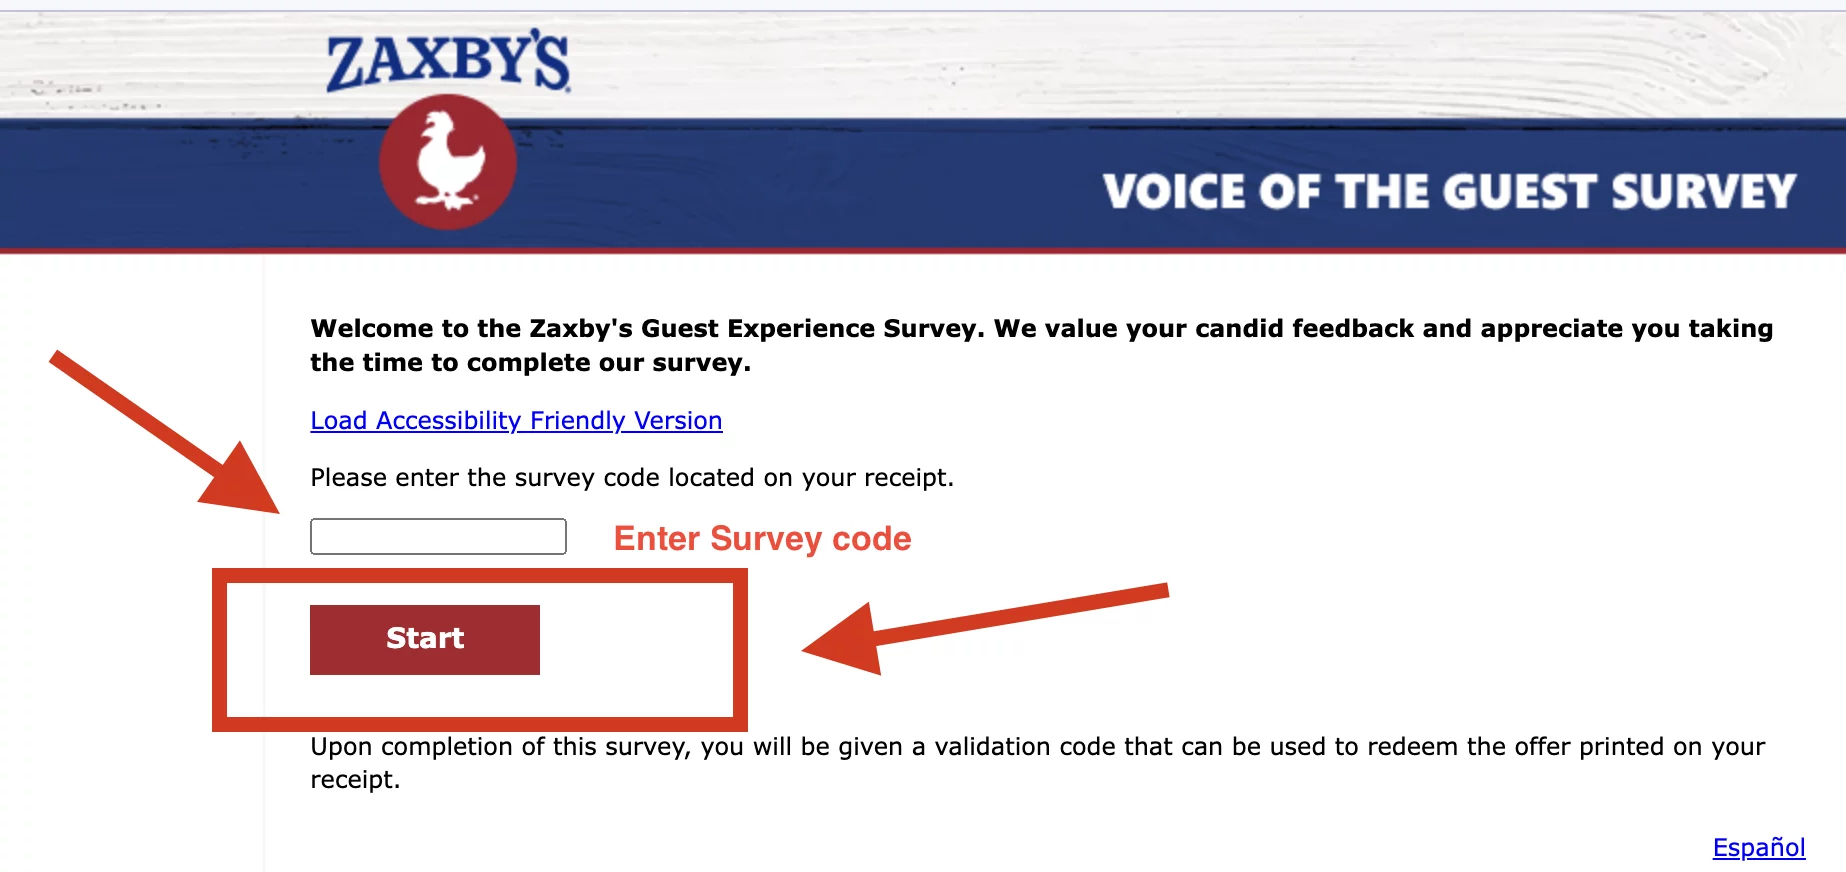 Zaxby's Voice of the Guest Survey at Zaxbyslistens